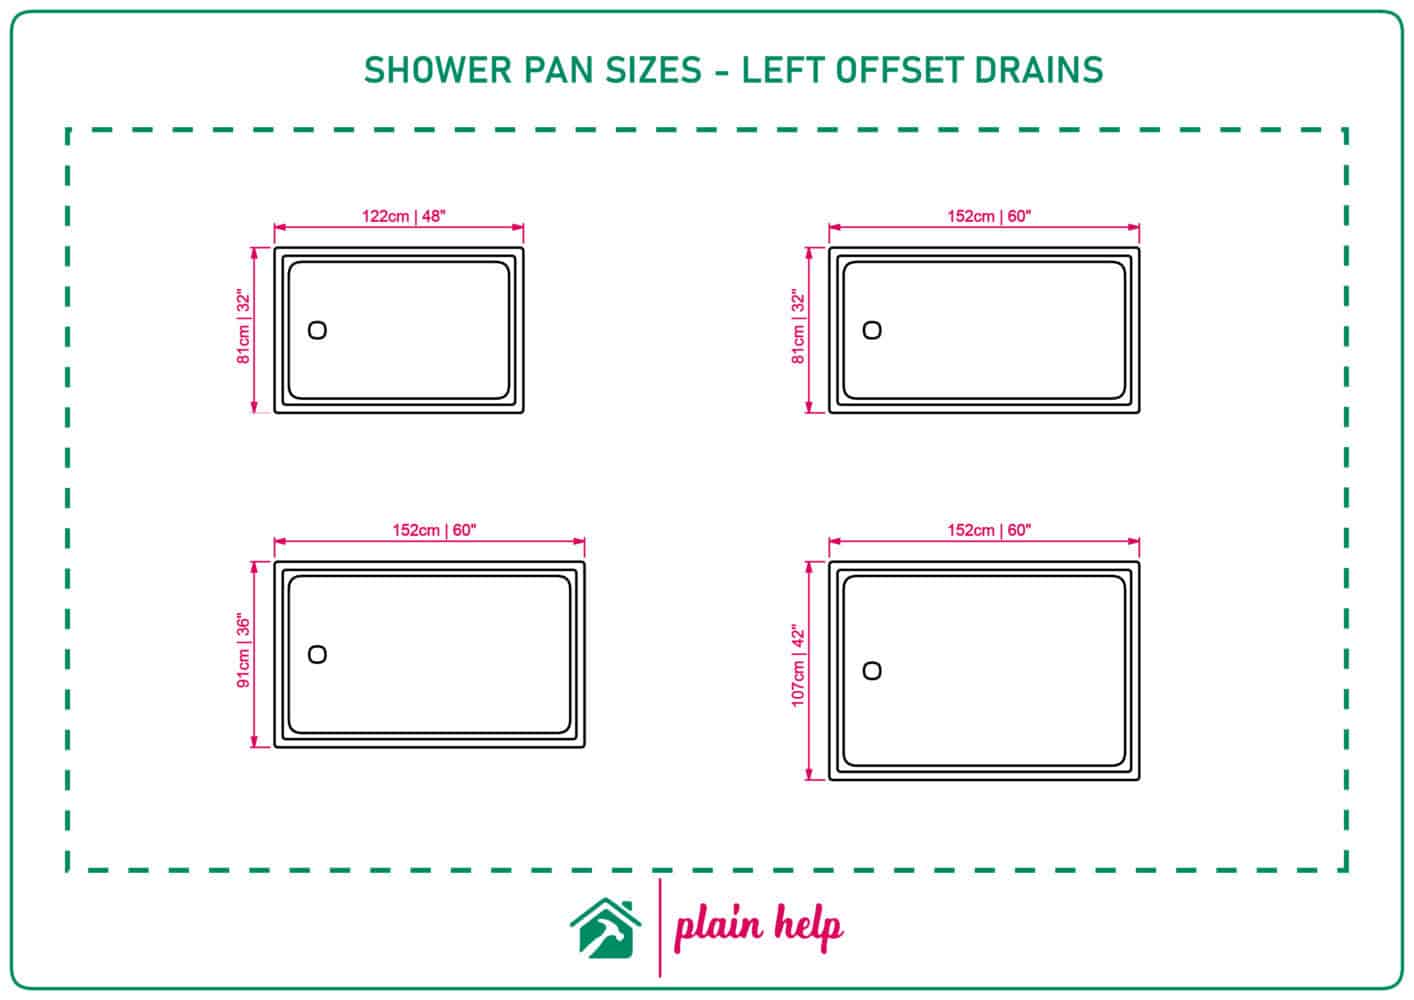 Shower pan sizes for left offset drains